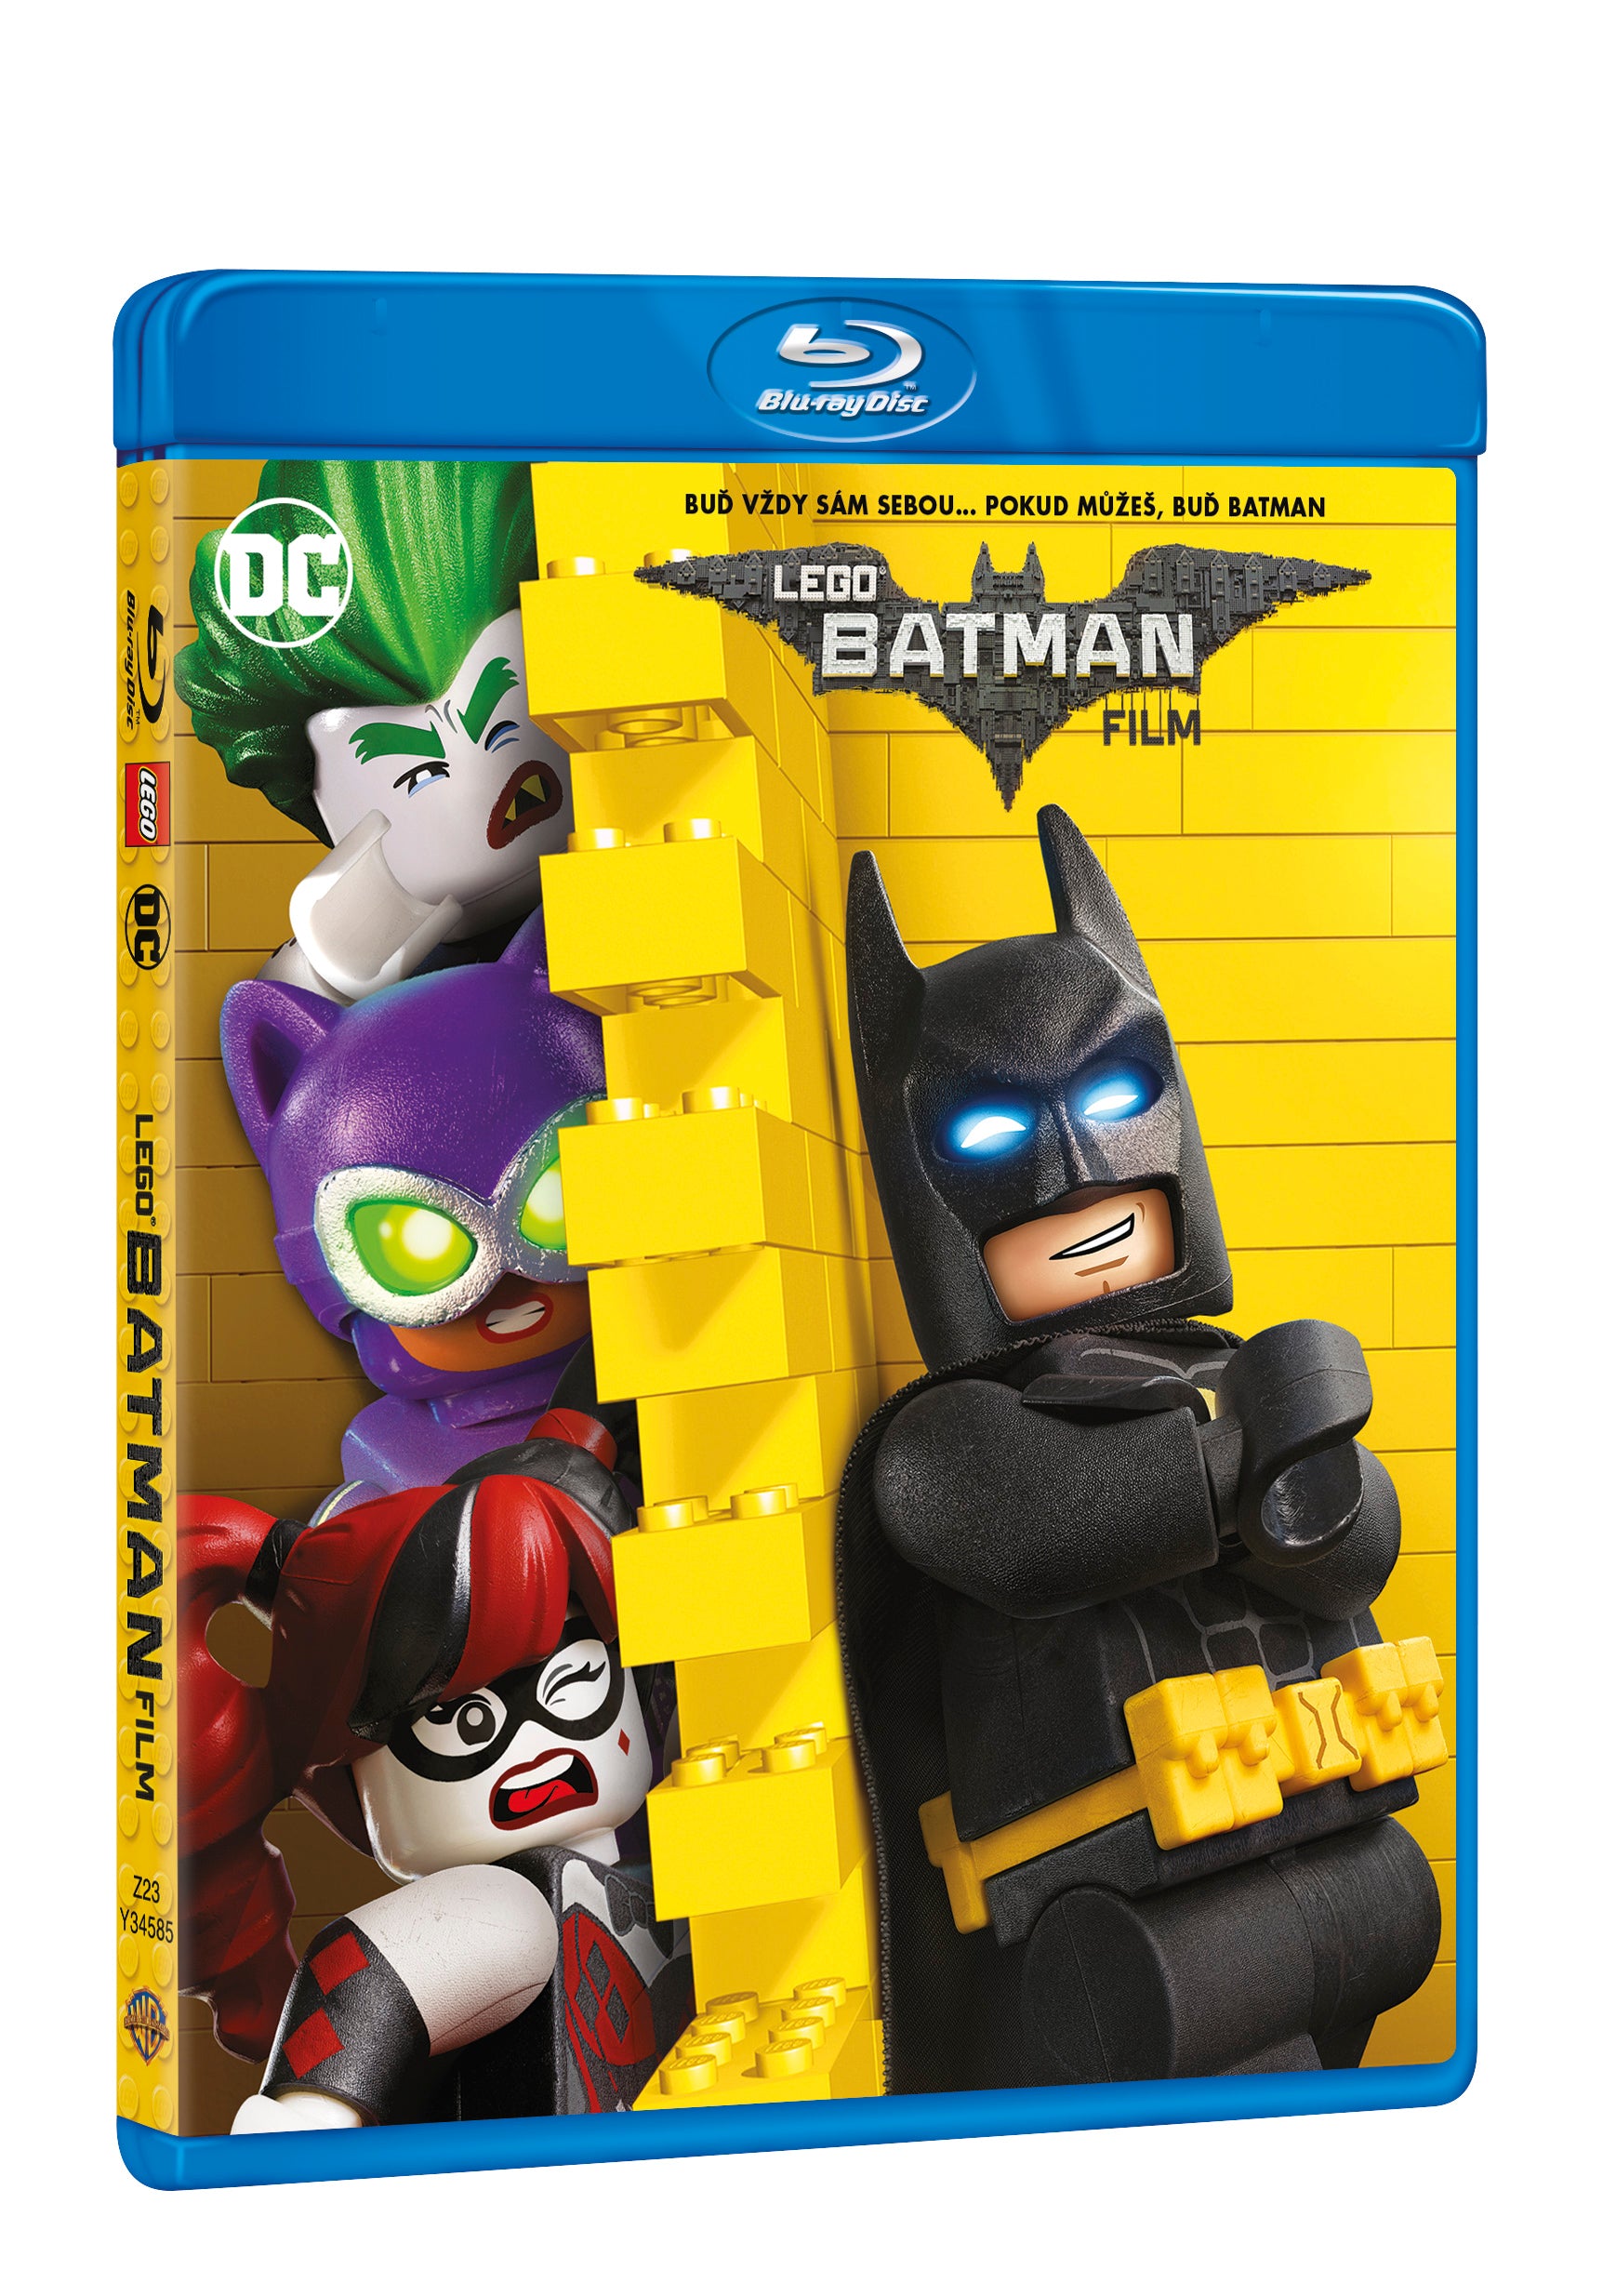 Lego Batman Film BD / The LEGO Batman Movie - Czech version